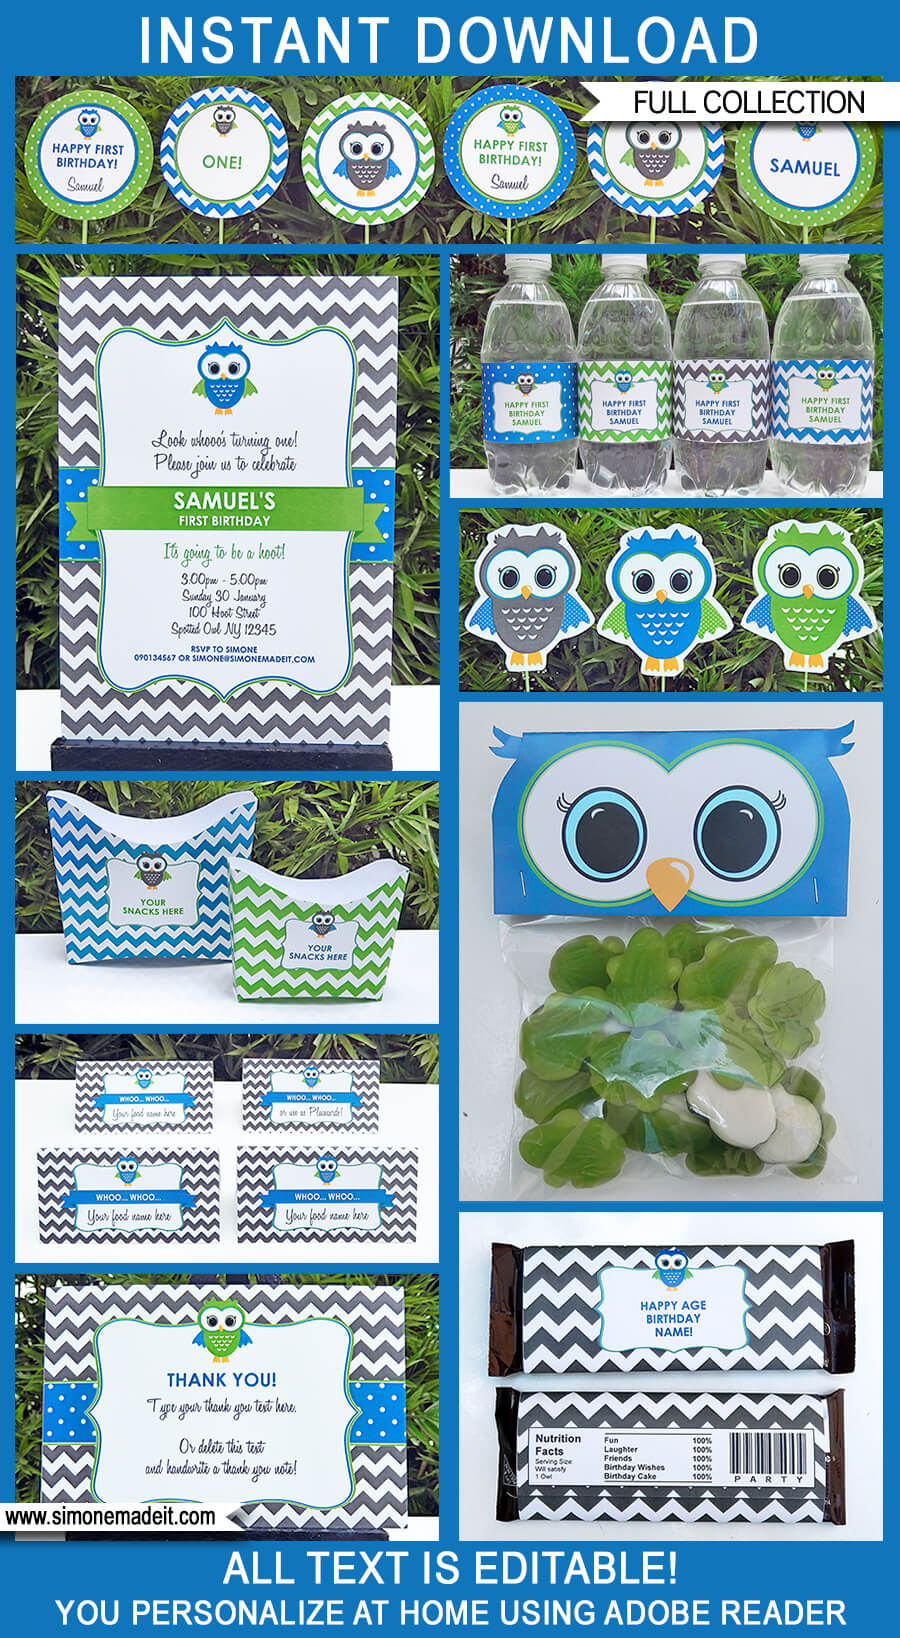 Blue Owl Birthday Party Printables, Invitations & Decorations | Editable Theme Templates | INSTANT DOWNLOAD $12.50 via SIMONEmadeit.com